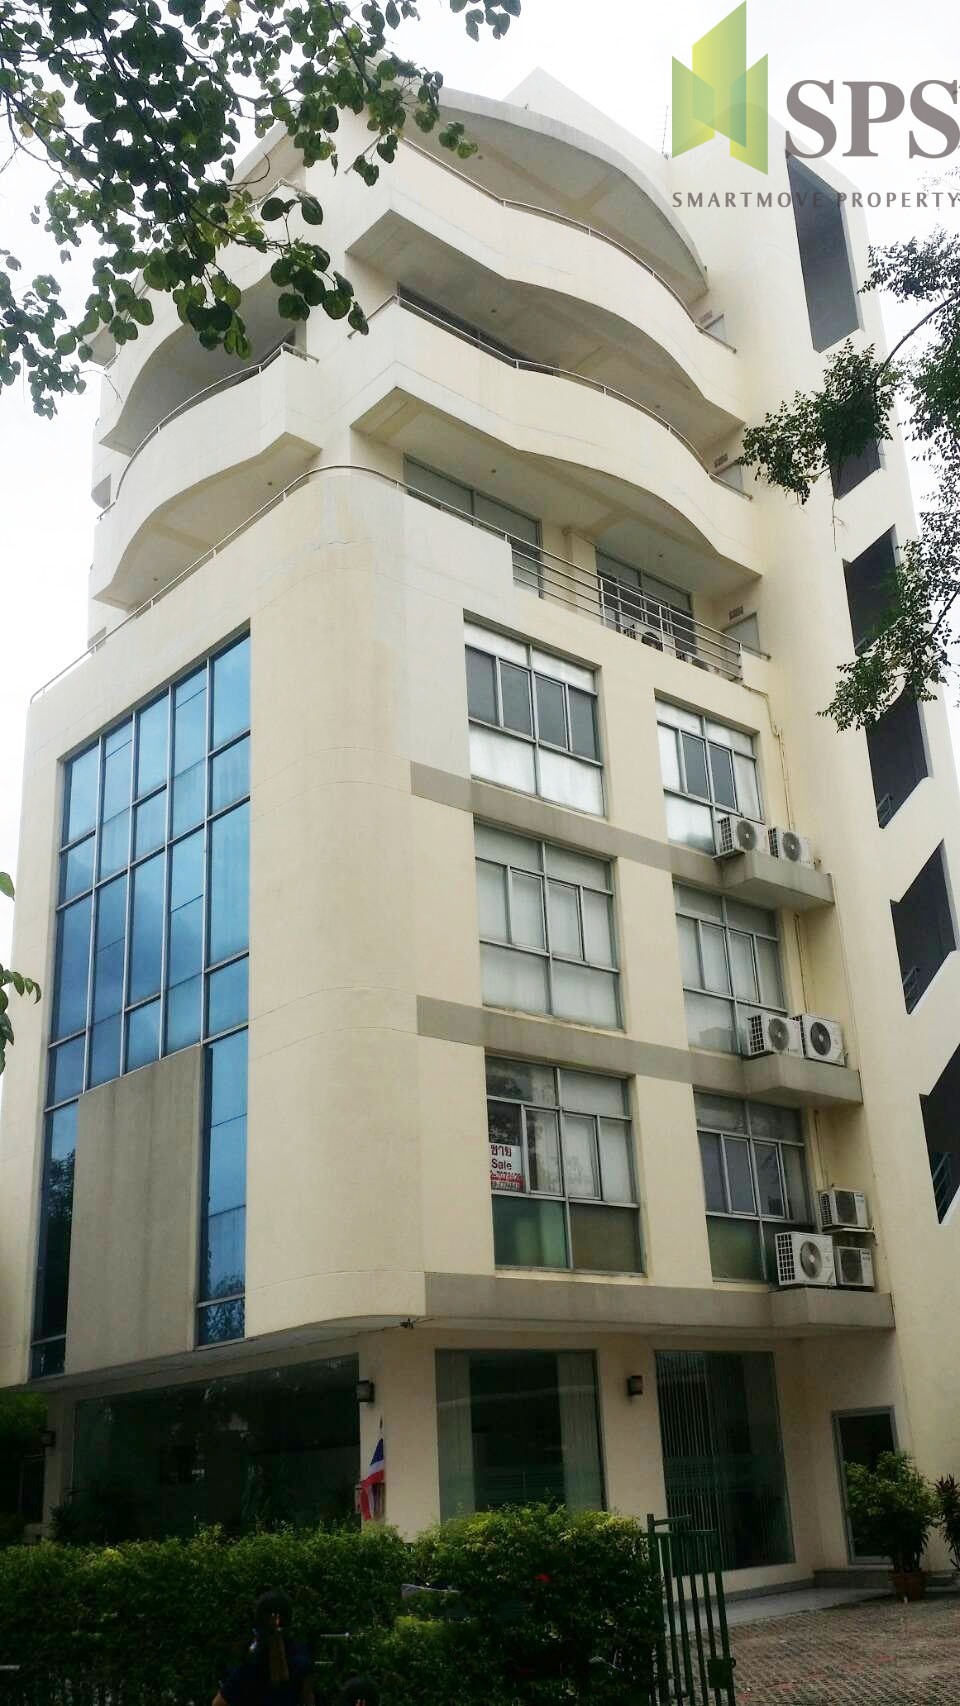  Office Building for Rent Srinakarin – อาคารสำนักงานให้เช่าทั้งตึก ตรงข้ามซีคอนสแควร์ ศรีนครินทร์ ( SPSPE263)